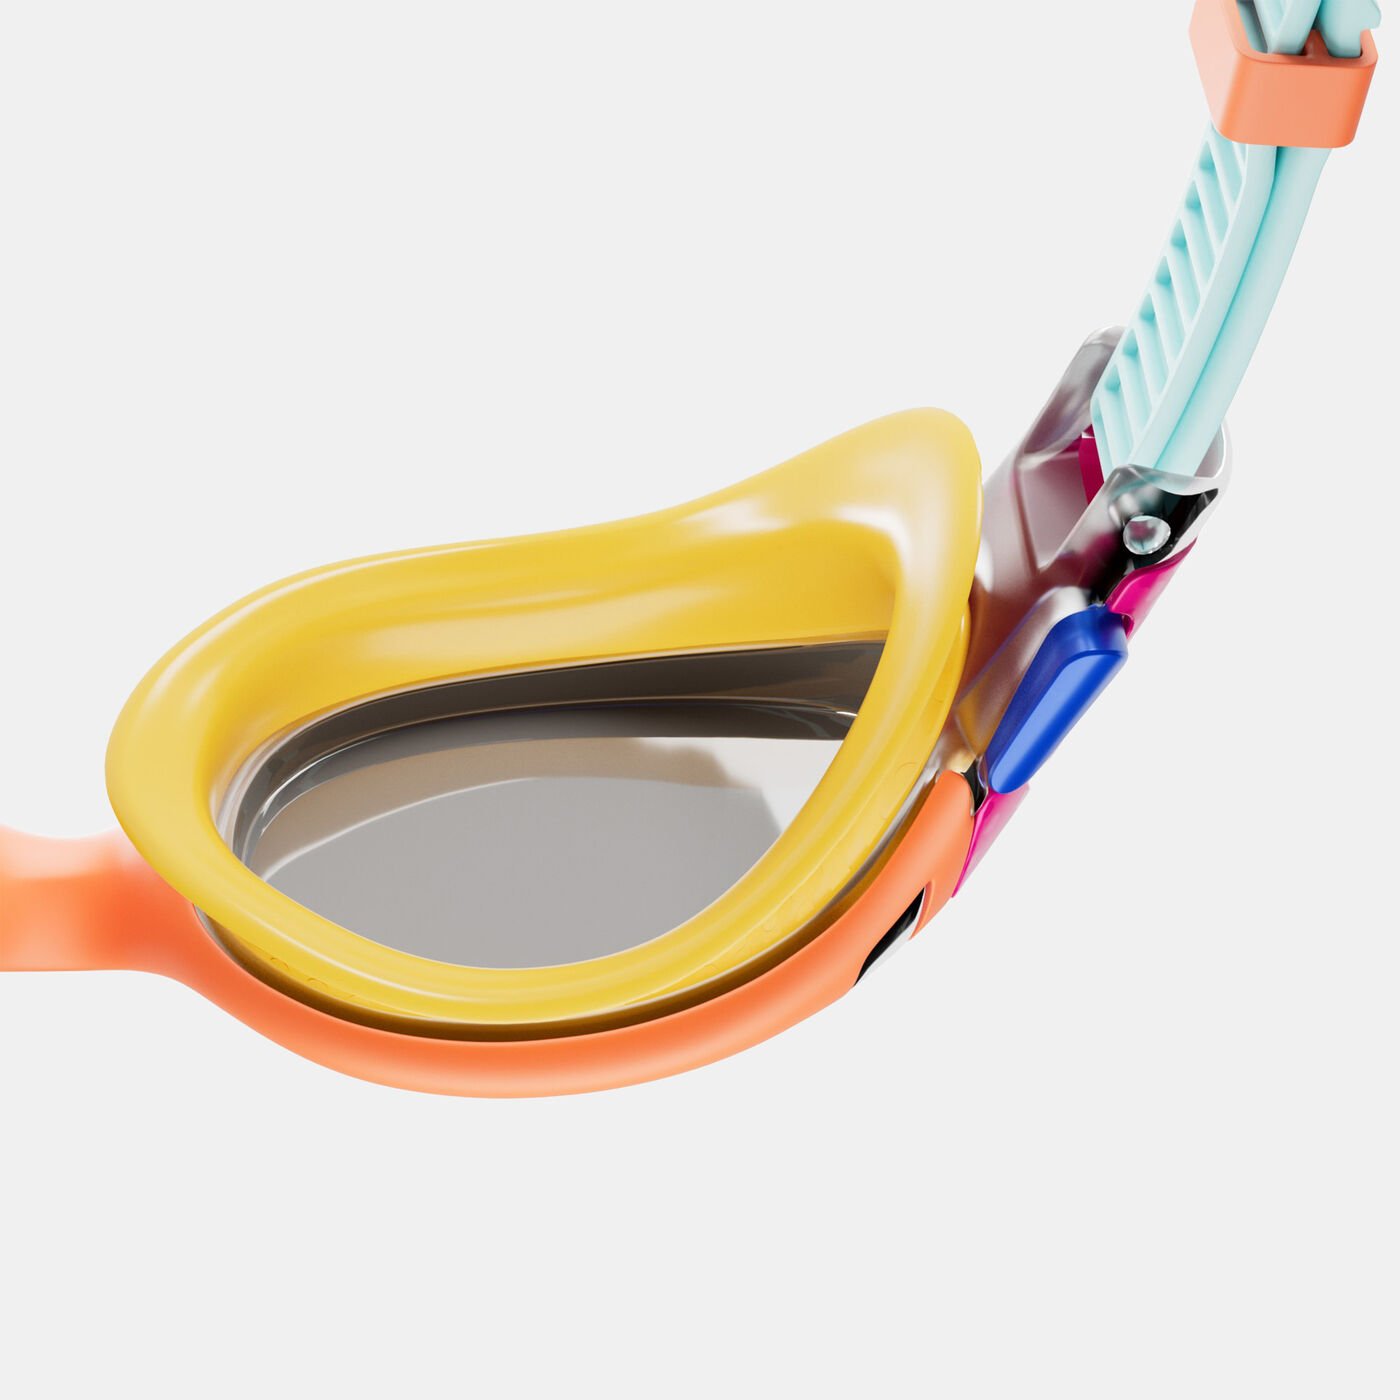 Kids' Biofuse 2.0 Mirror Swimming Goggles